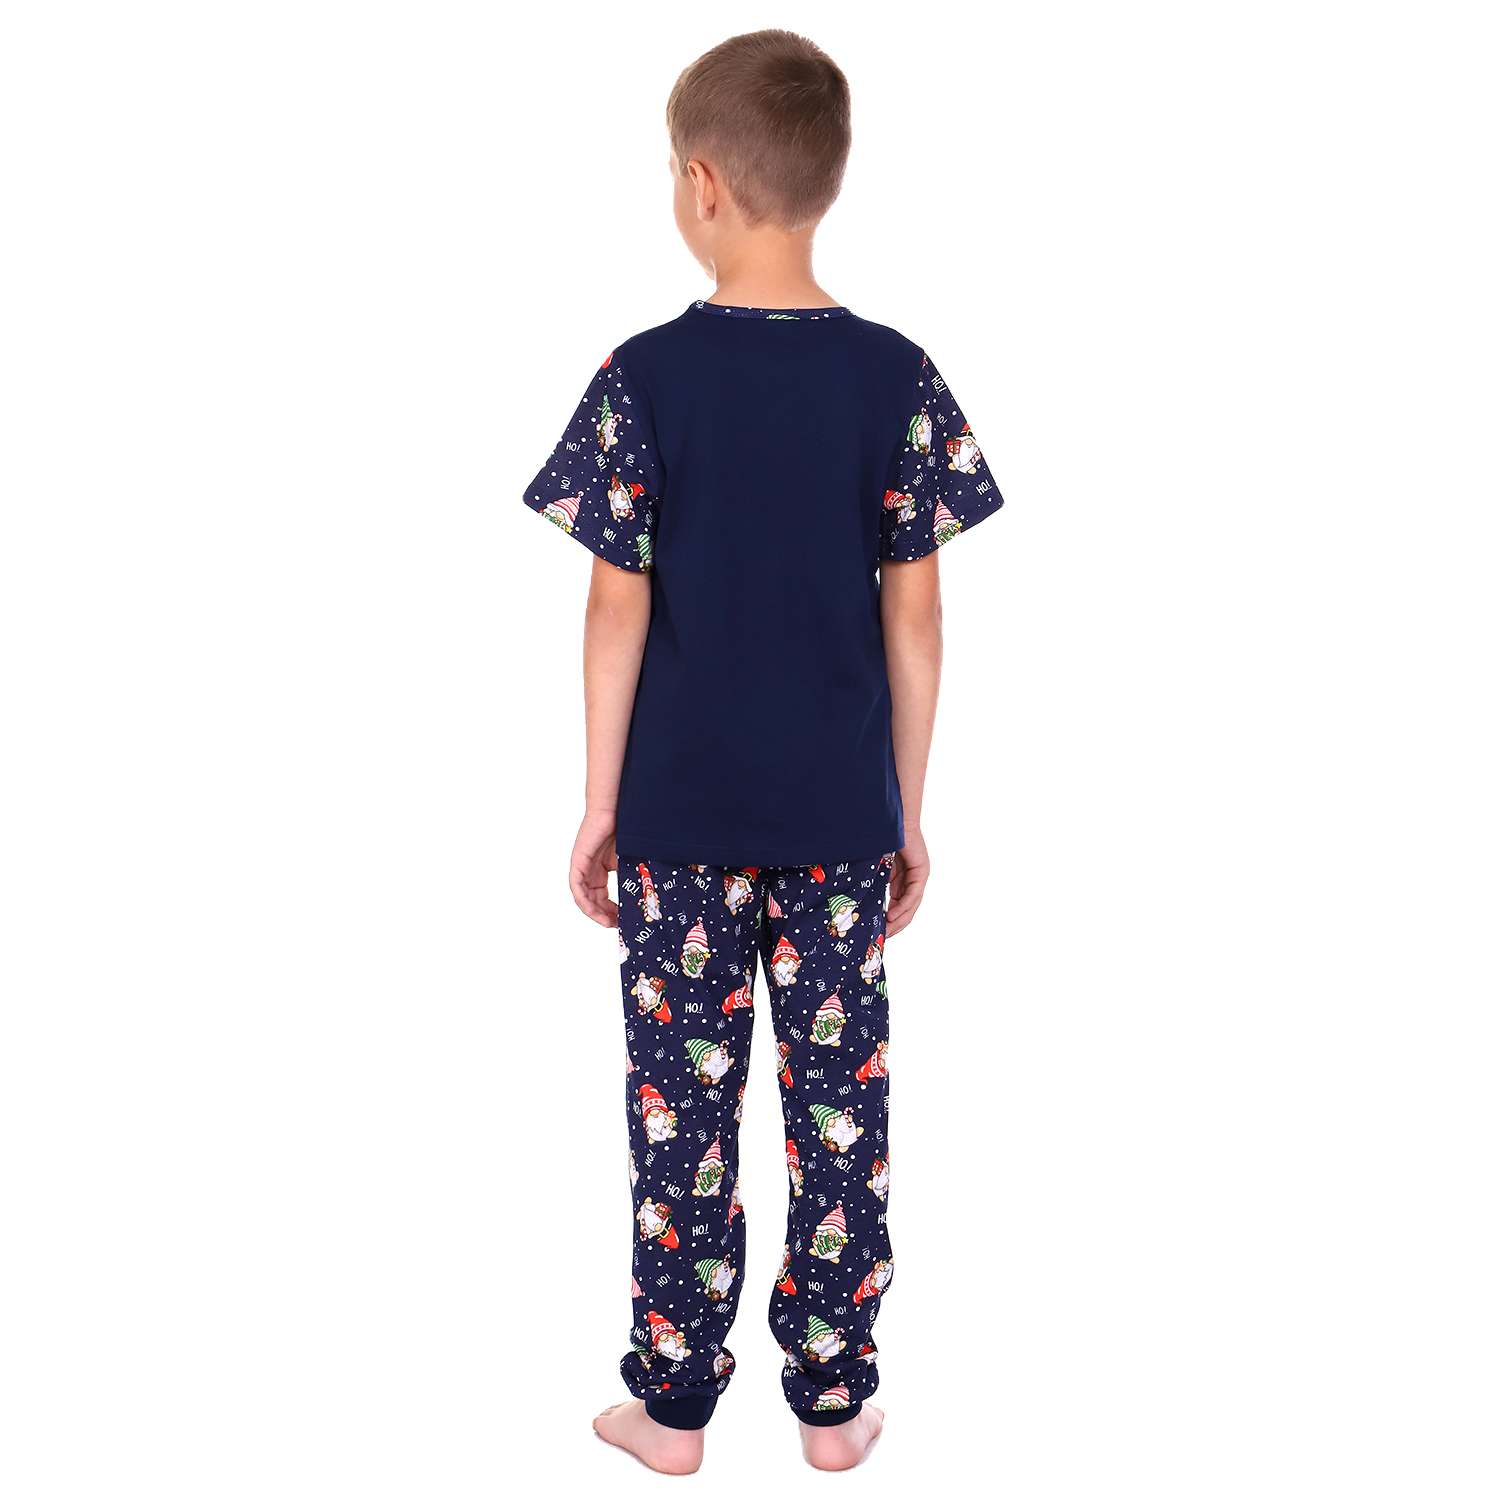 Пижама Детская Одежда 0405КПрД2/темно-синий6 - фото 7